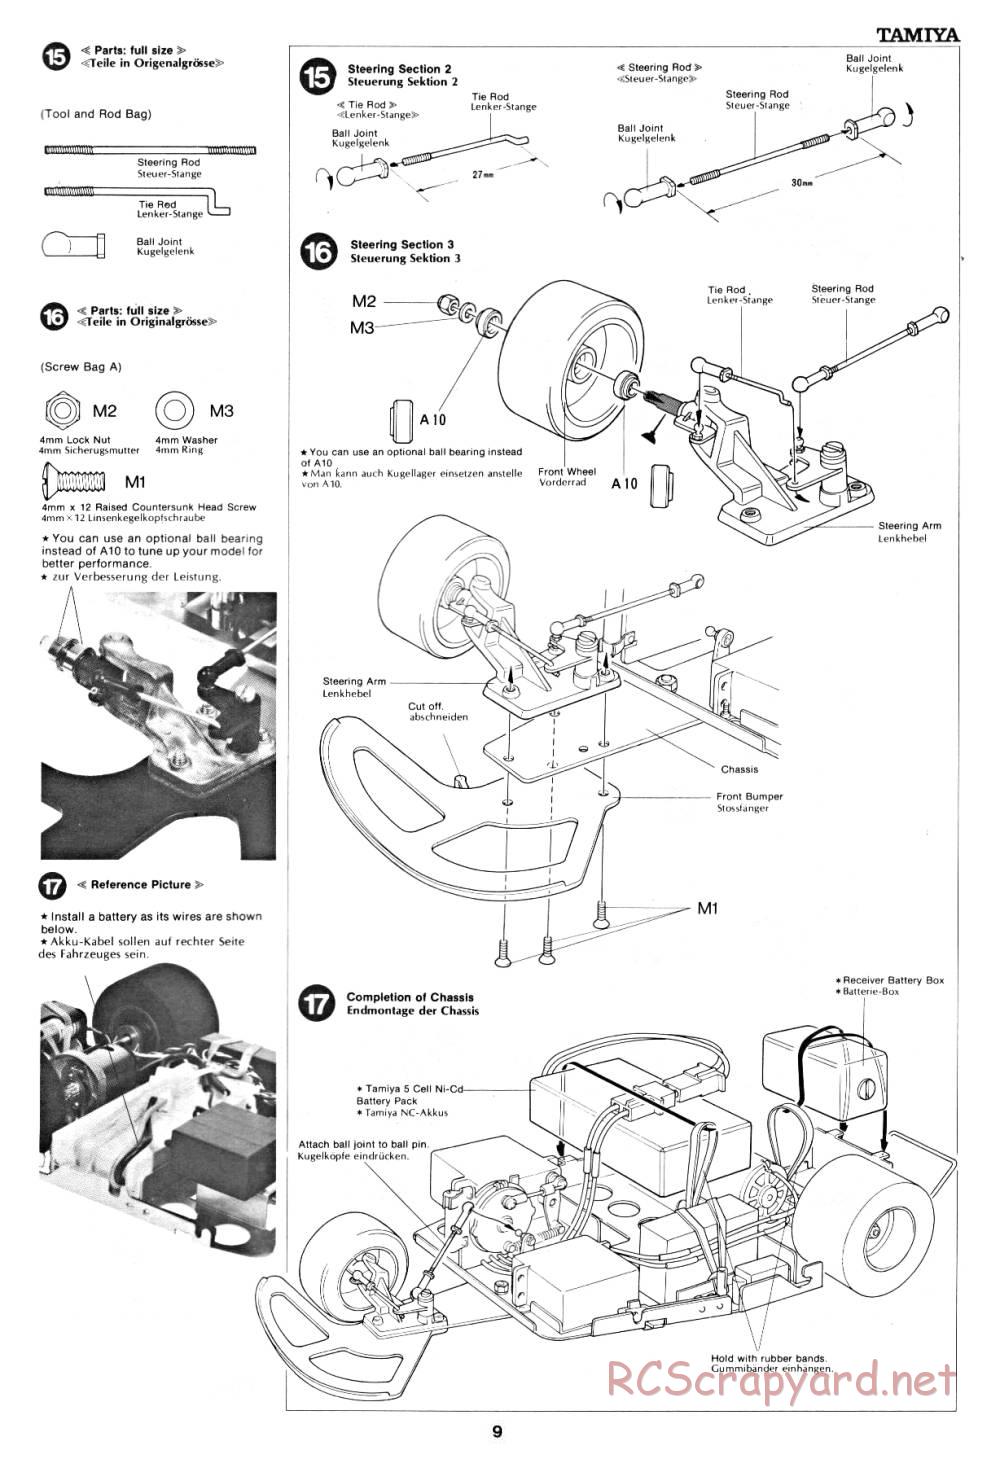 Tamiya - B2B Racing Sidecar - 58017 - Manual - Page 9